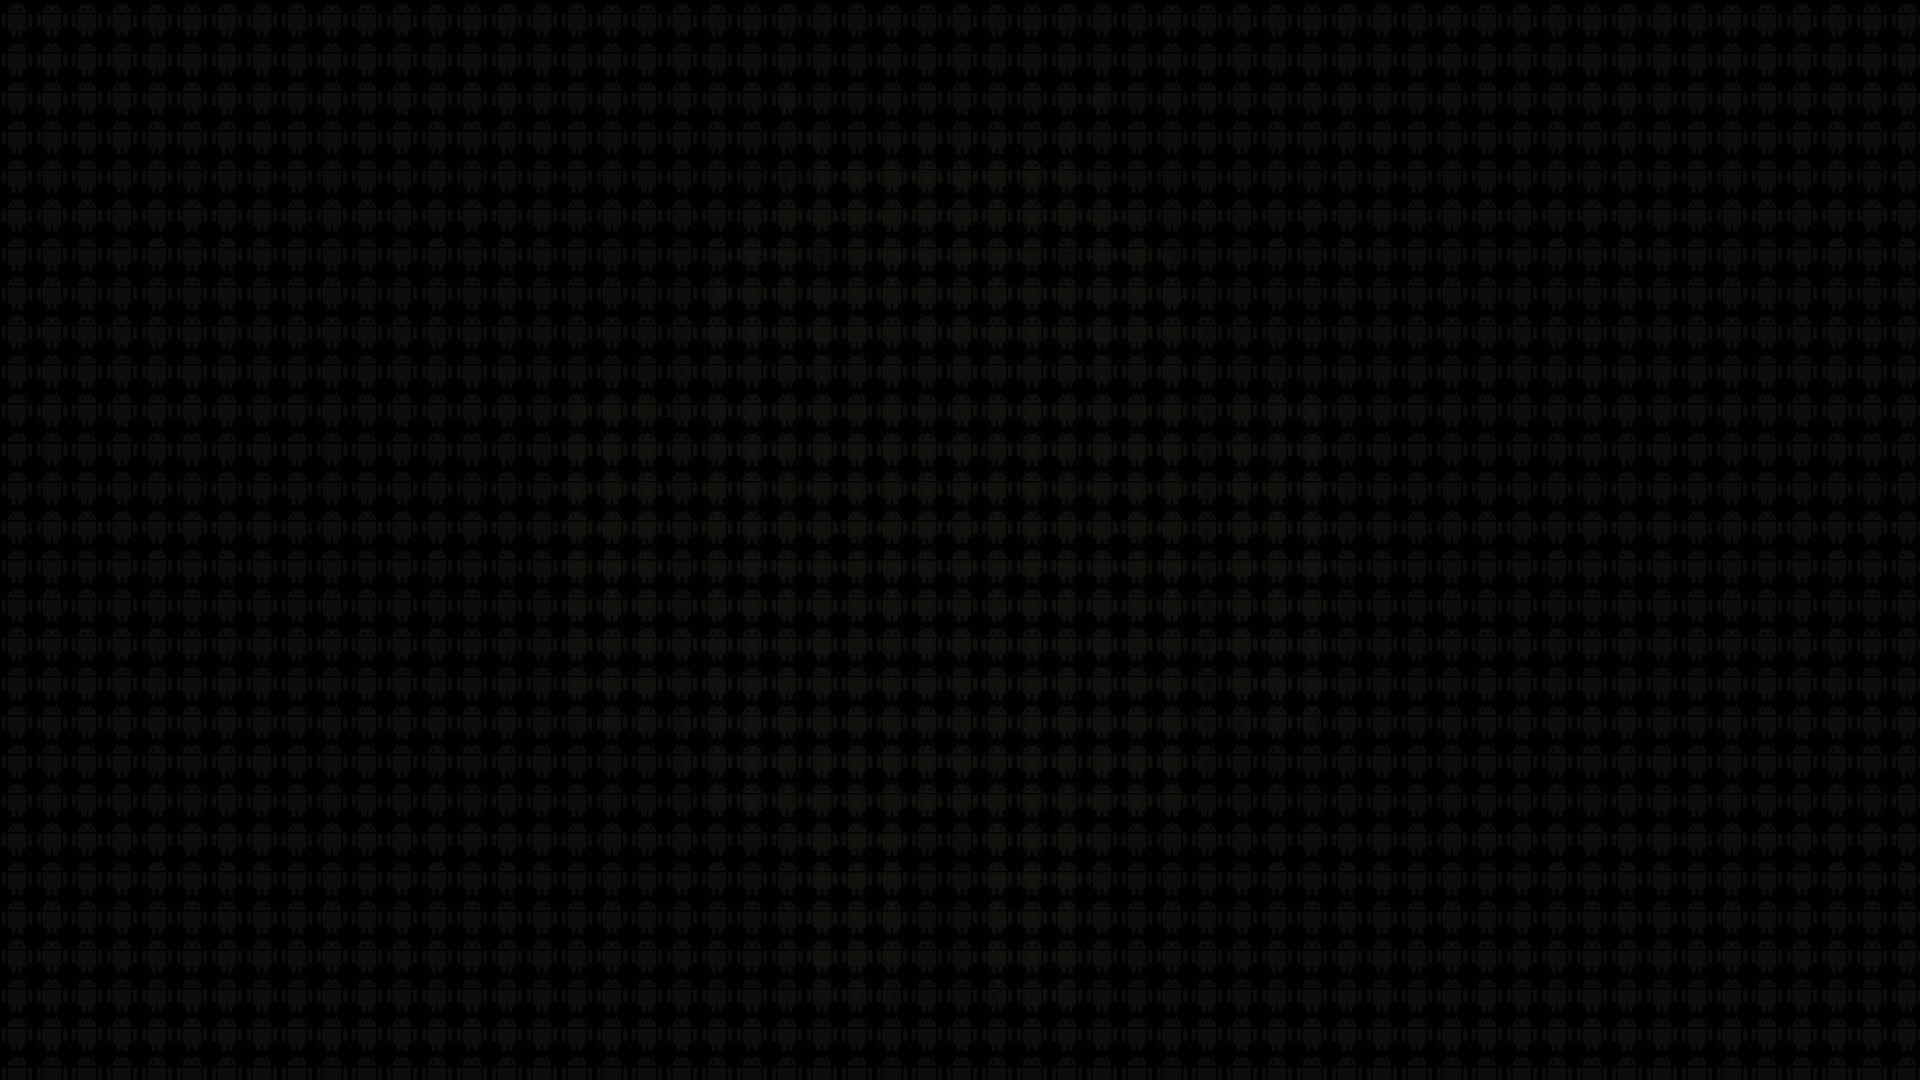 1920x1080 Tron Grid Pattern Subtle android grid wallpaper